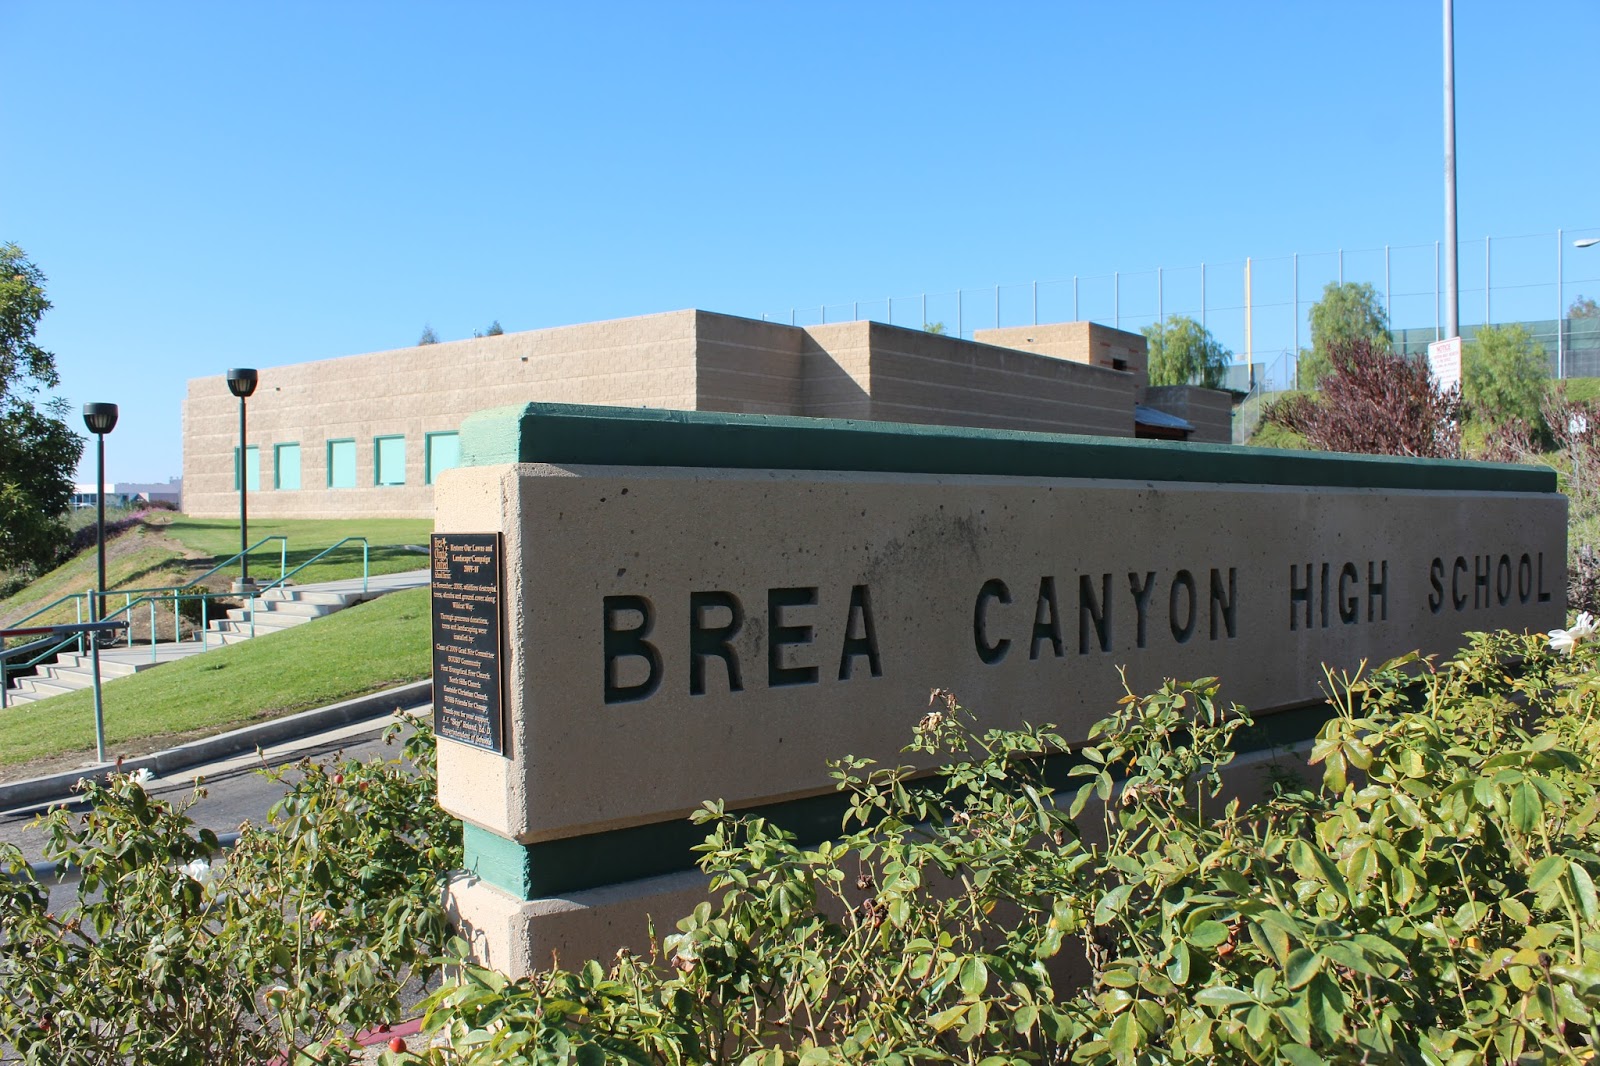 An image of Brea Canyon High School